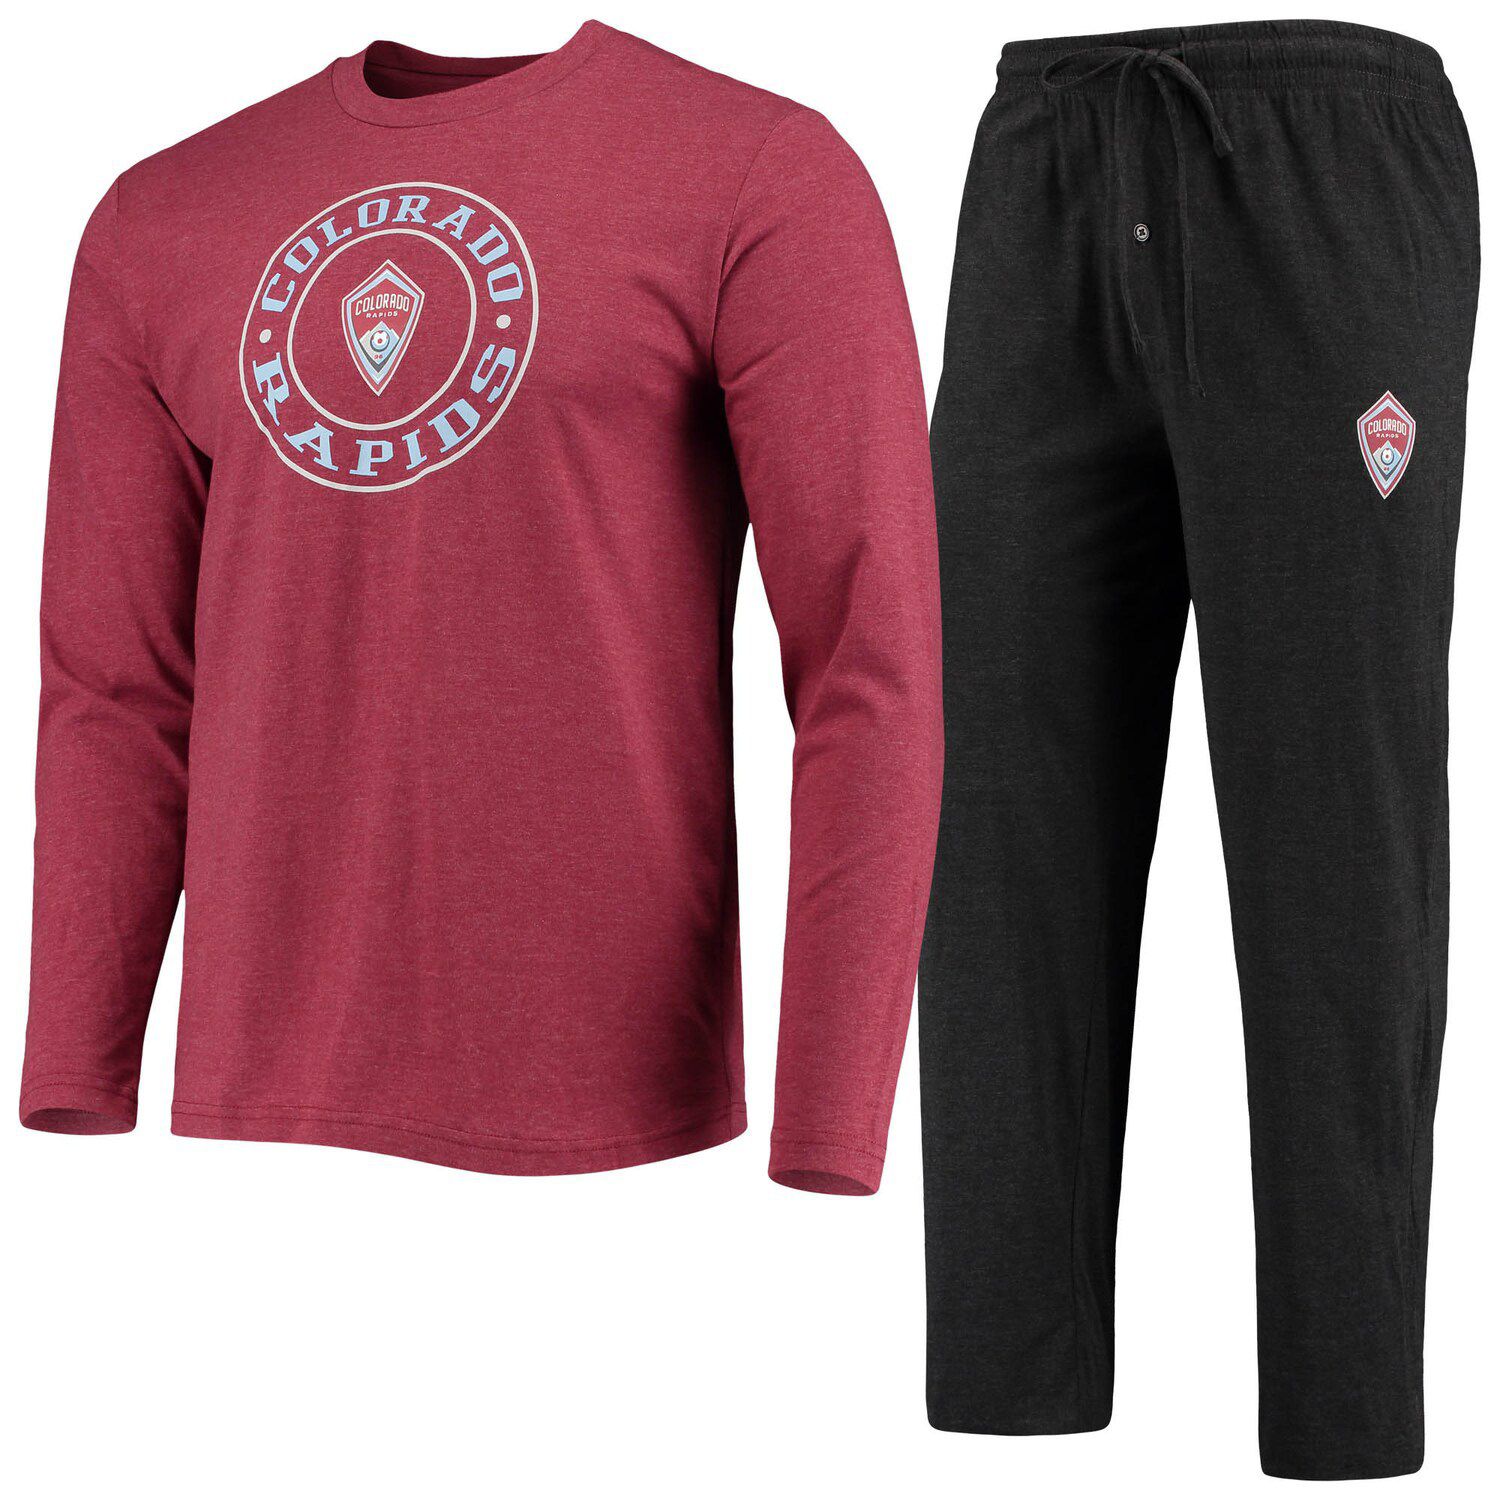 Image for Unbranded Men's Concepts Sport Burgundy/Black Colorado Rapids Meter Long Sleeve T-Shirt & Pants Sleep Set at Kohl's.